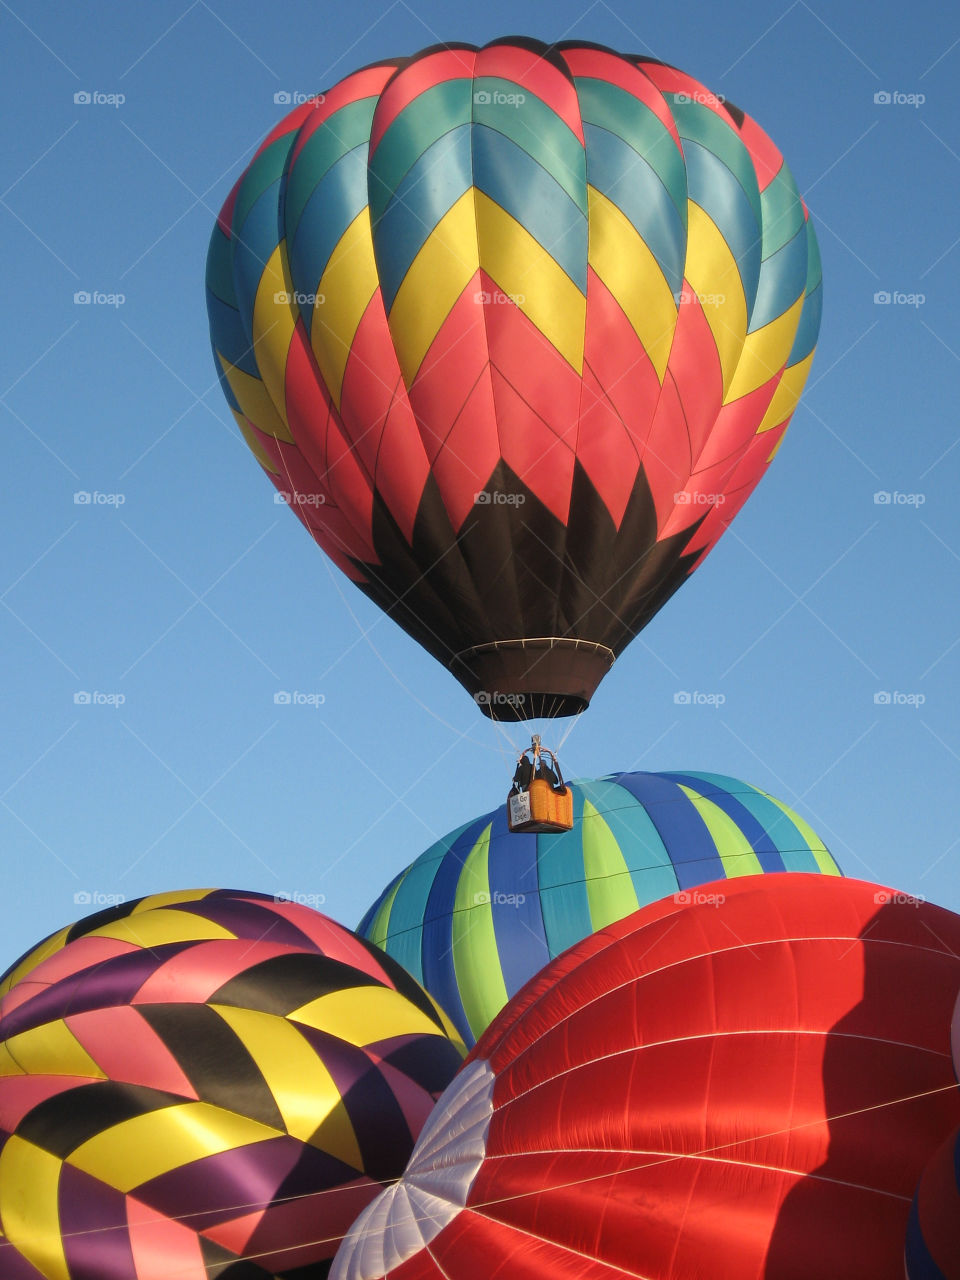 Ballooning